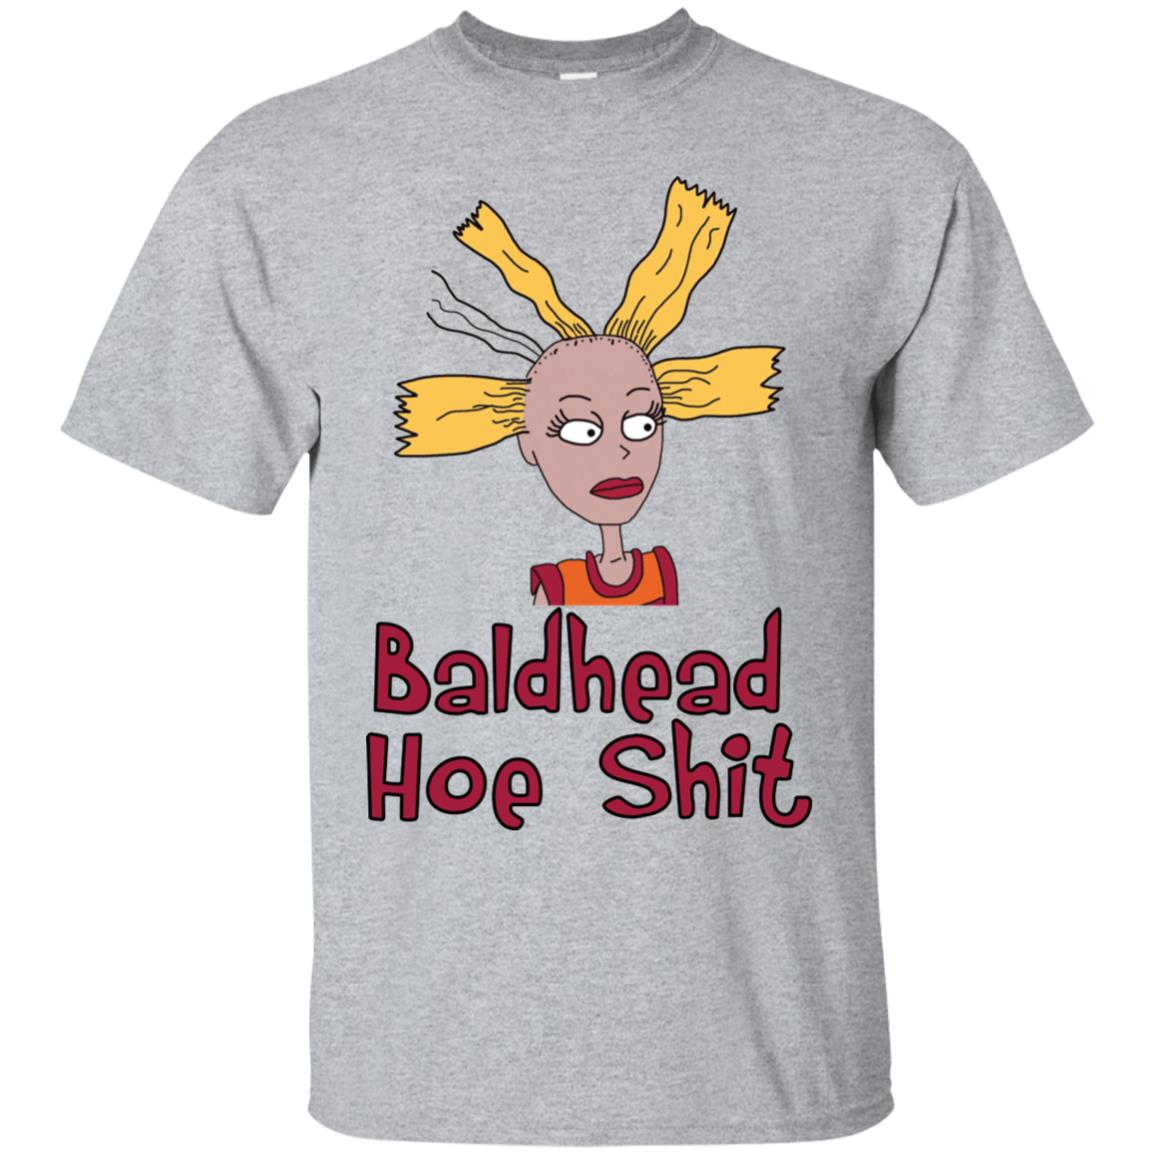 Baldhead Hoe Shit Shirt, hoodie